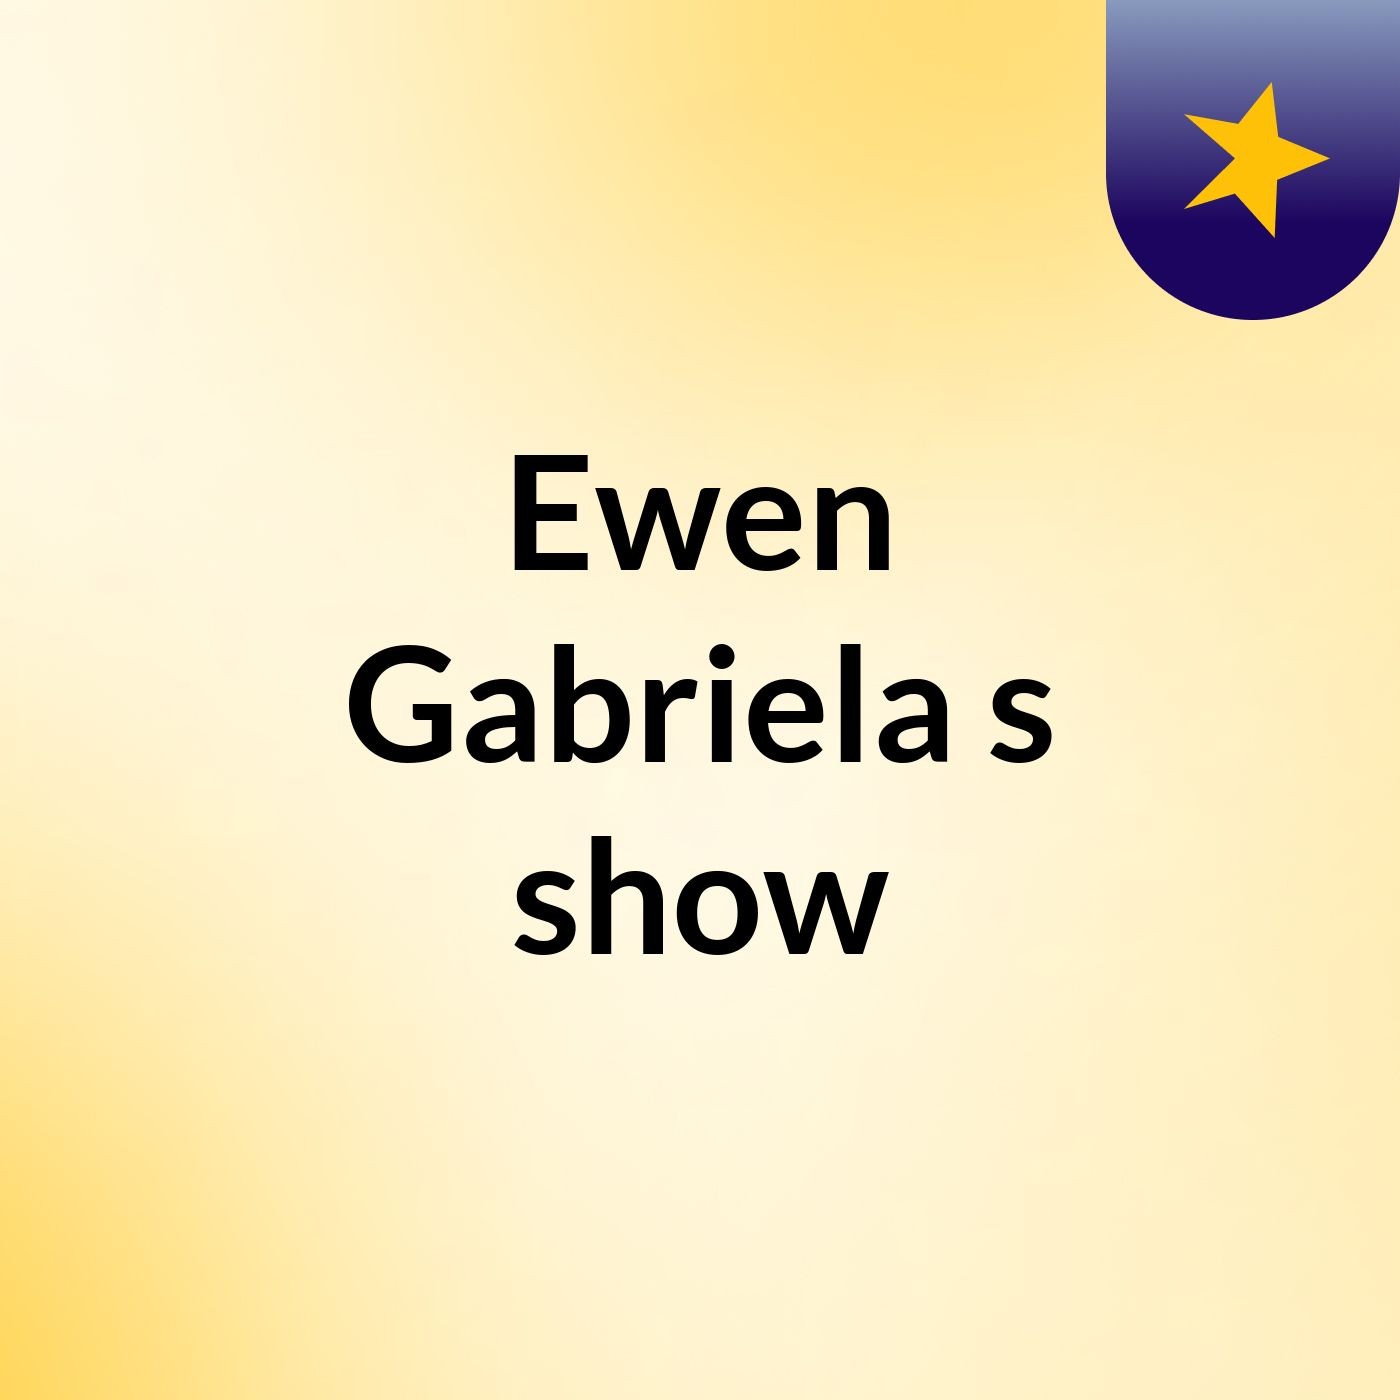 Ewen Gabriela's show